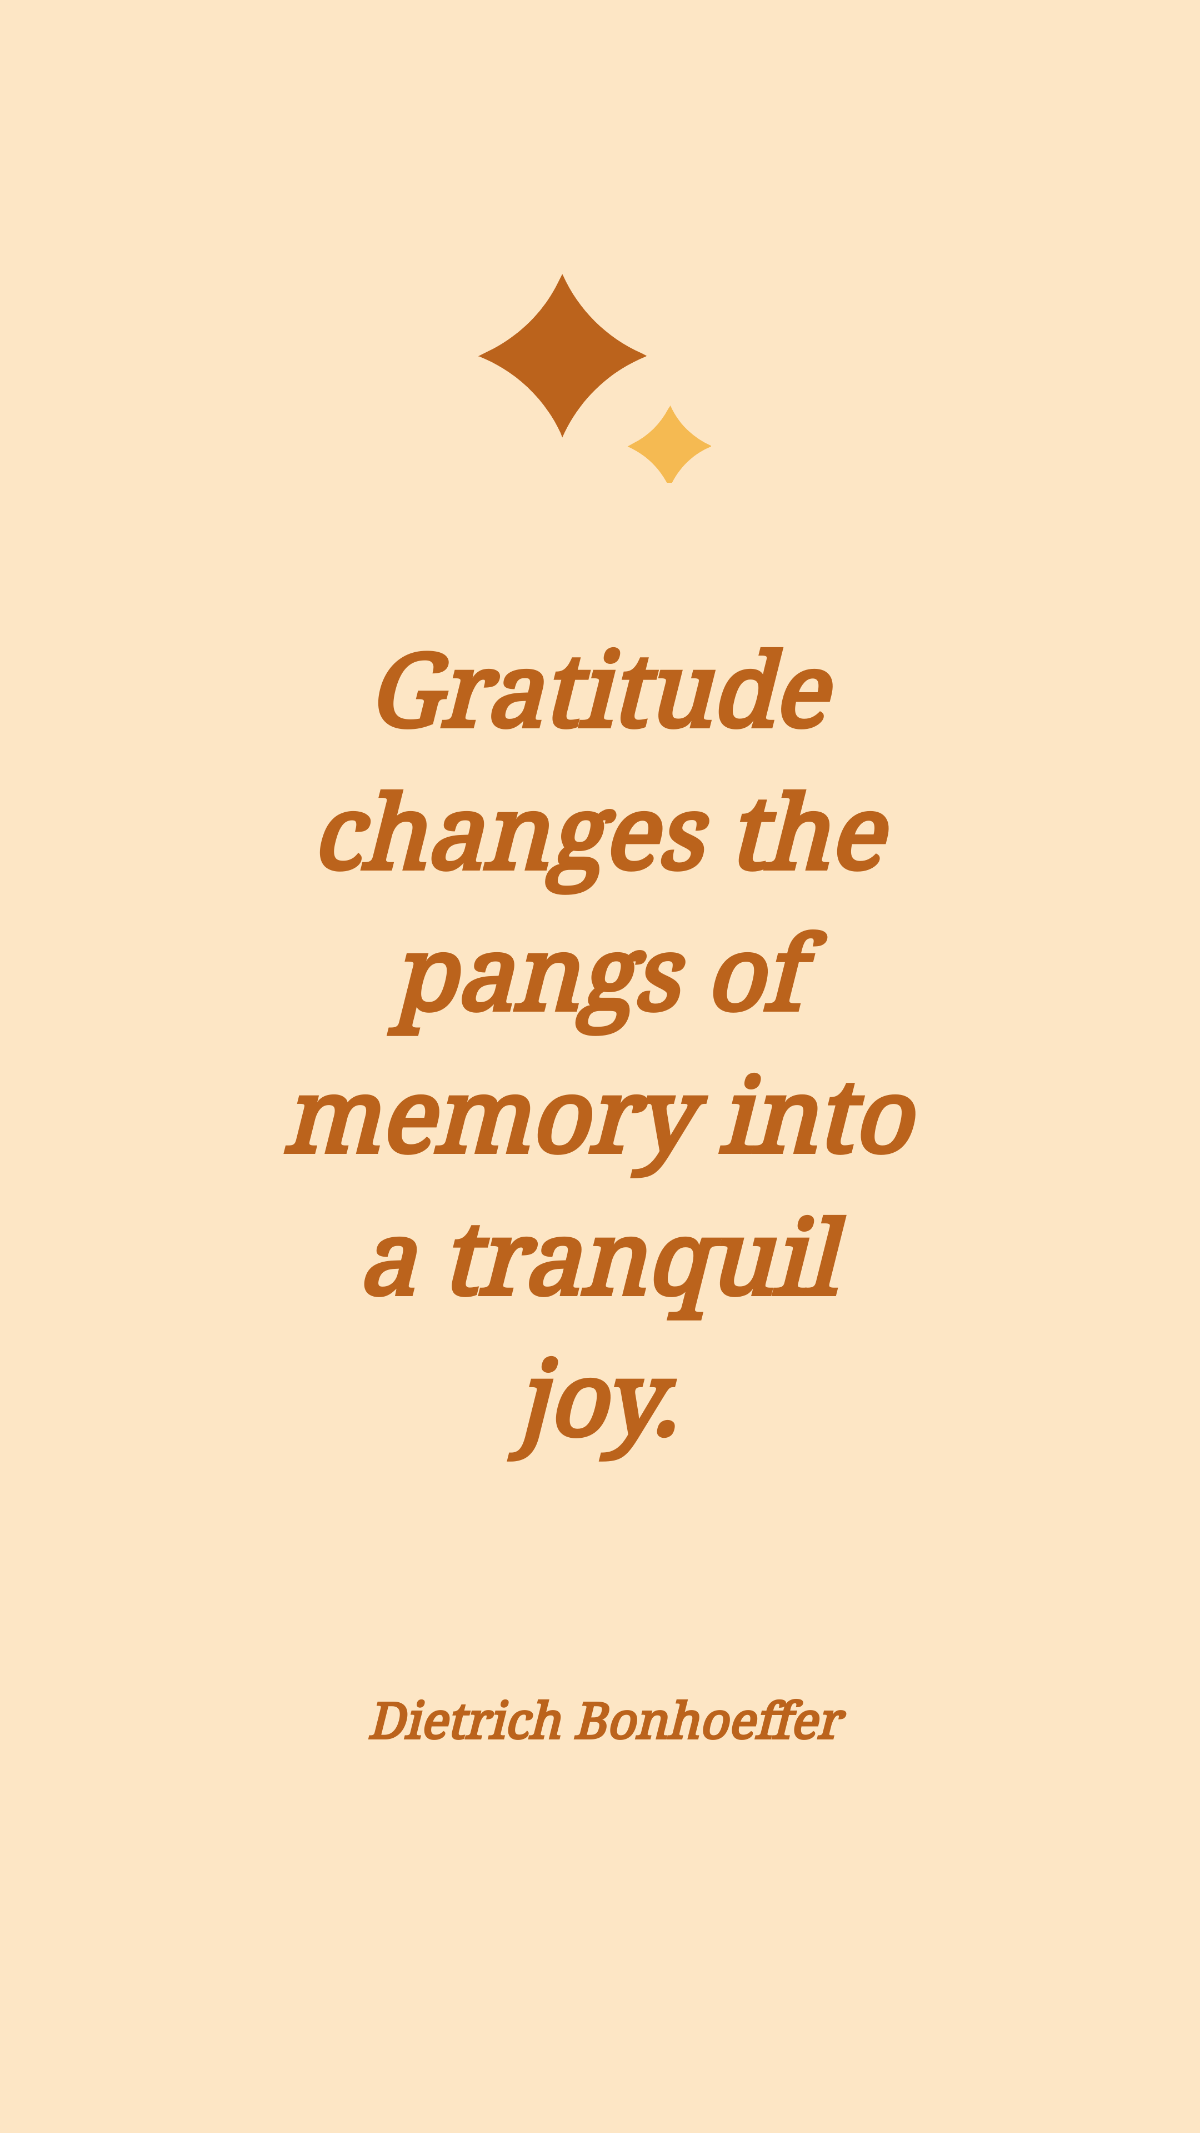 Dietrich Bonhoeffer - Gratitude changes the pangs of memory into a tranquil joy.